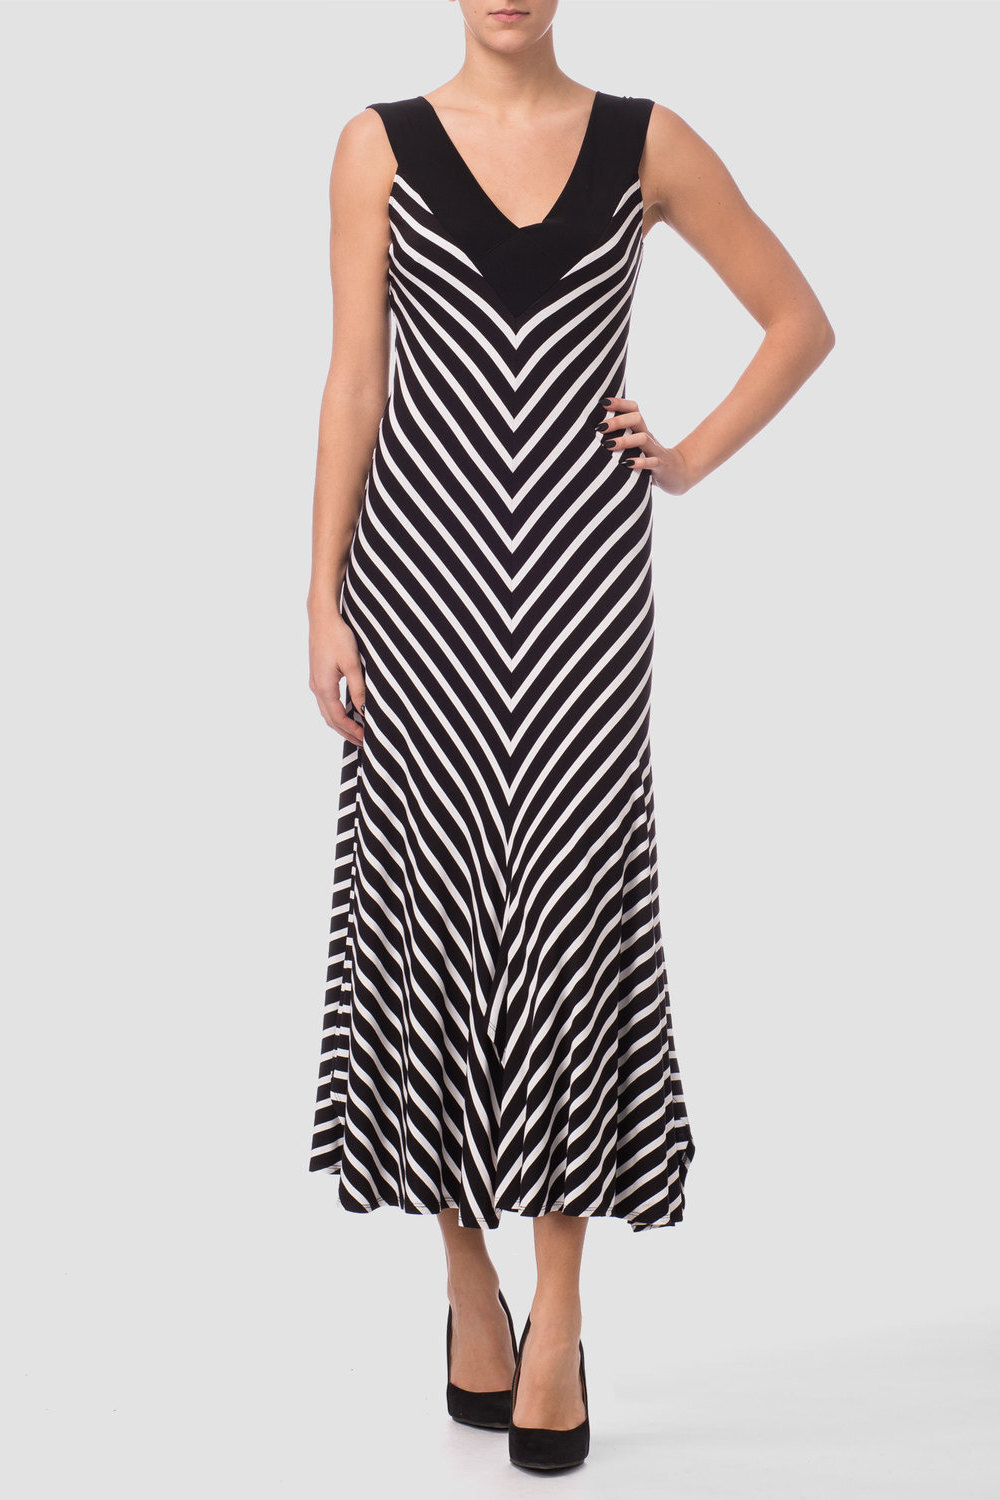 Joseph Ribkoff dress style 172909. Black/white